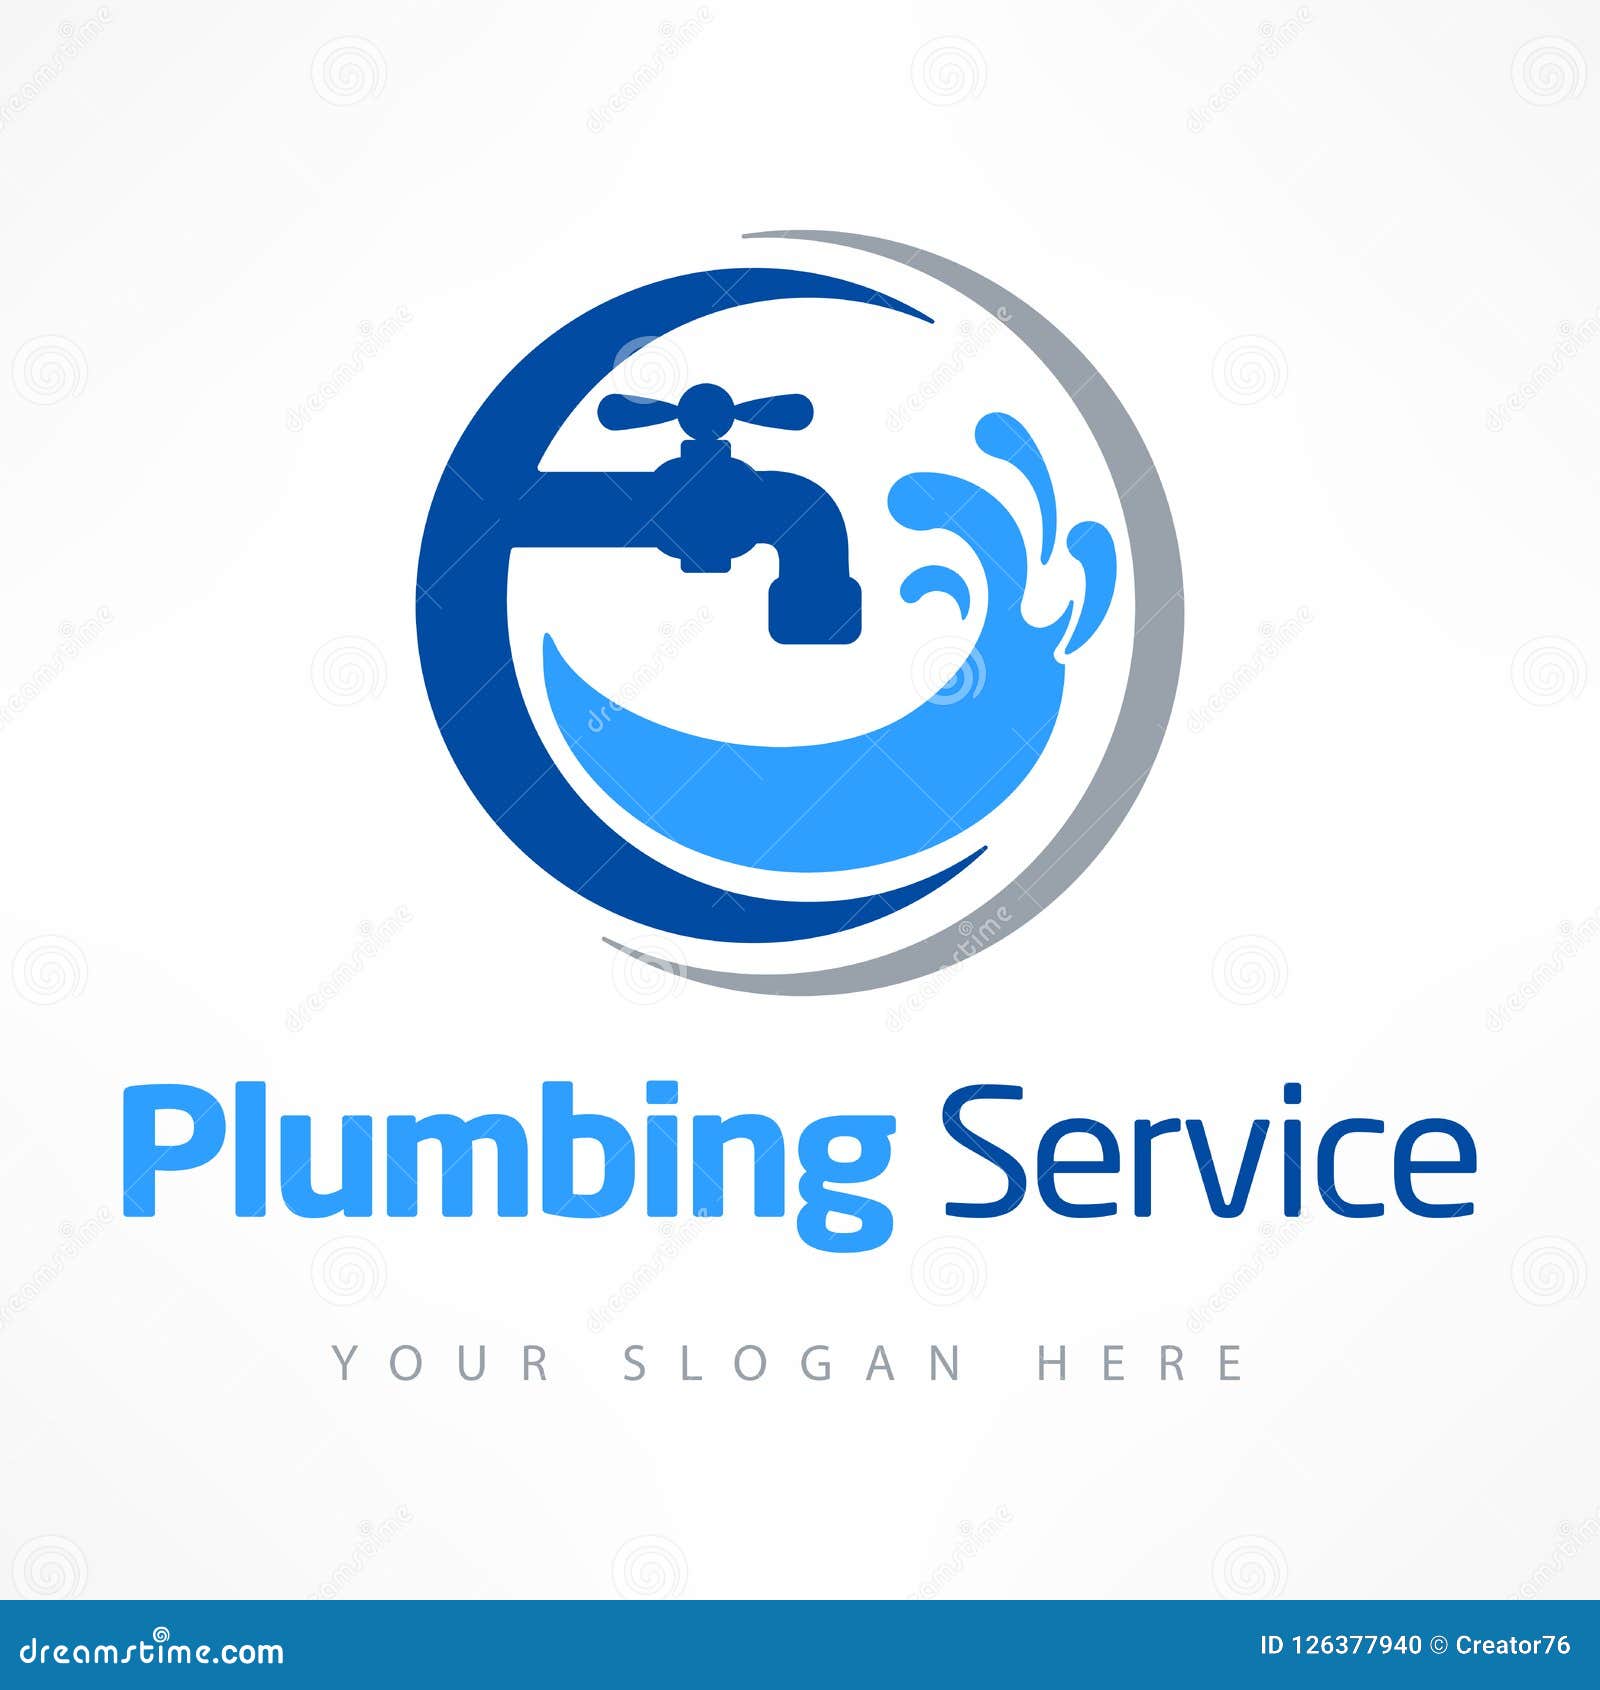 plumbing service logo in blue